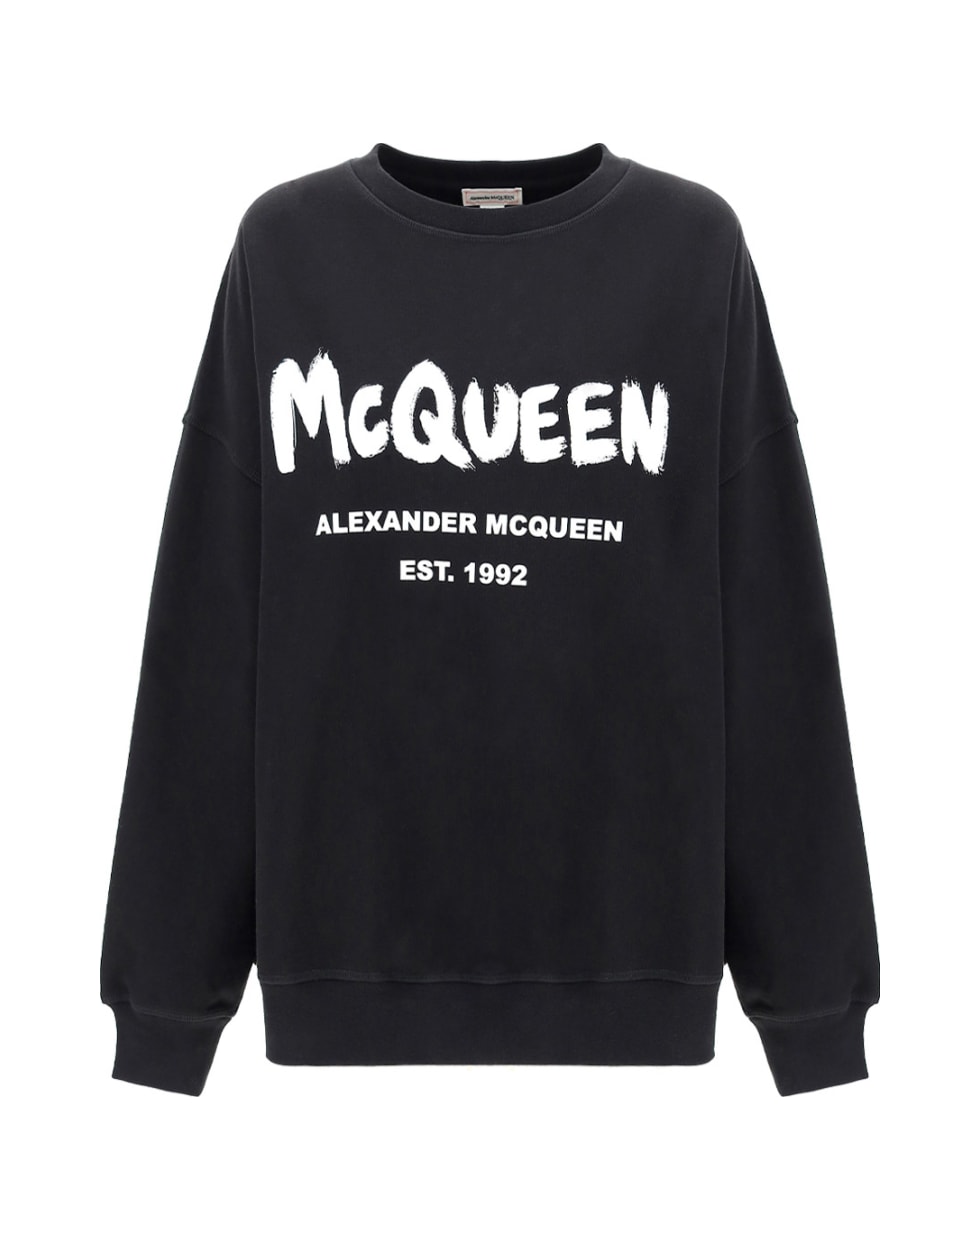 Alexander McQueen Alexander Mc Queen Graffiti Sweatshirt - Black/white